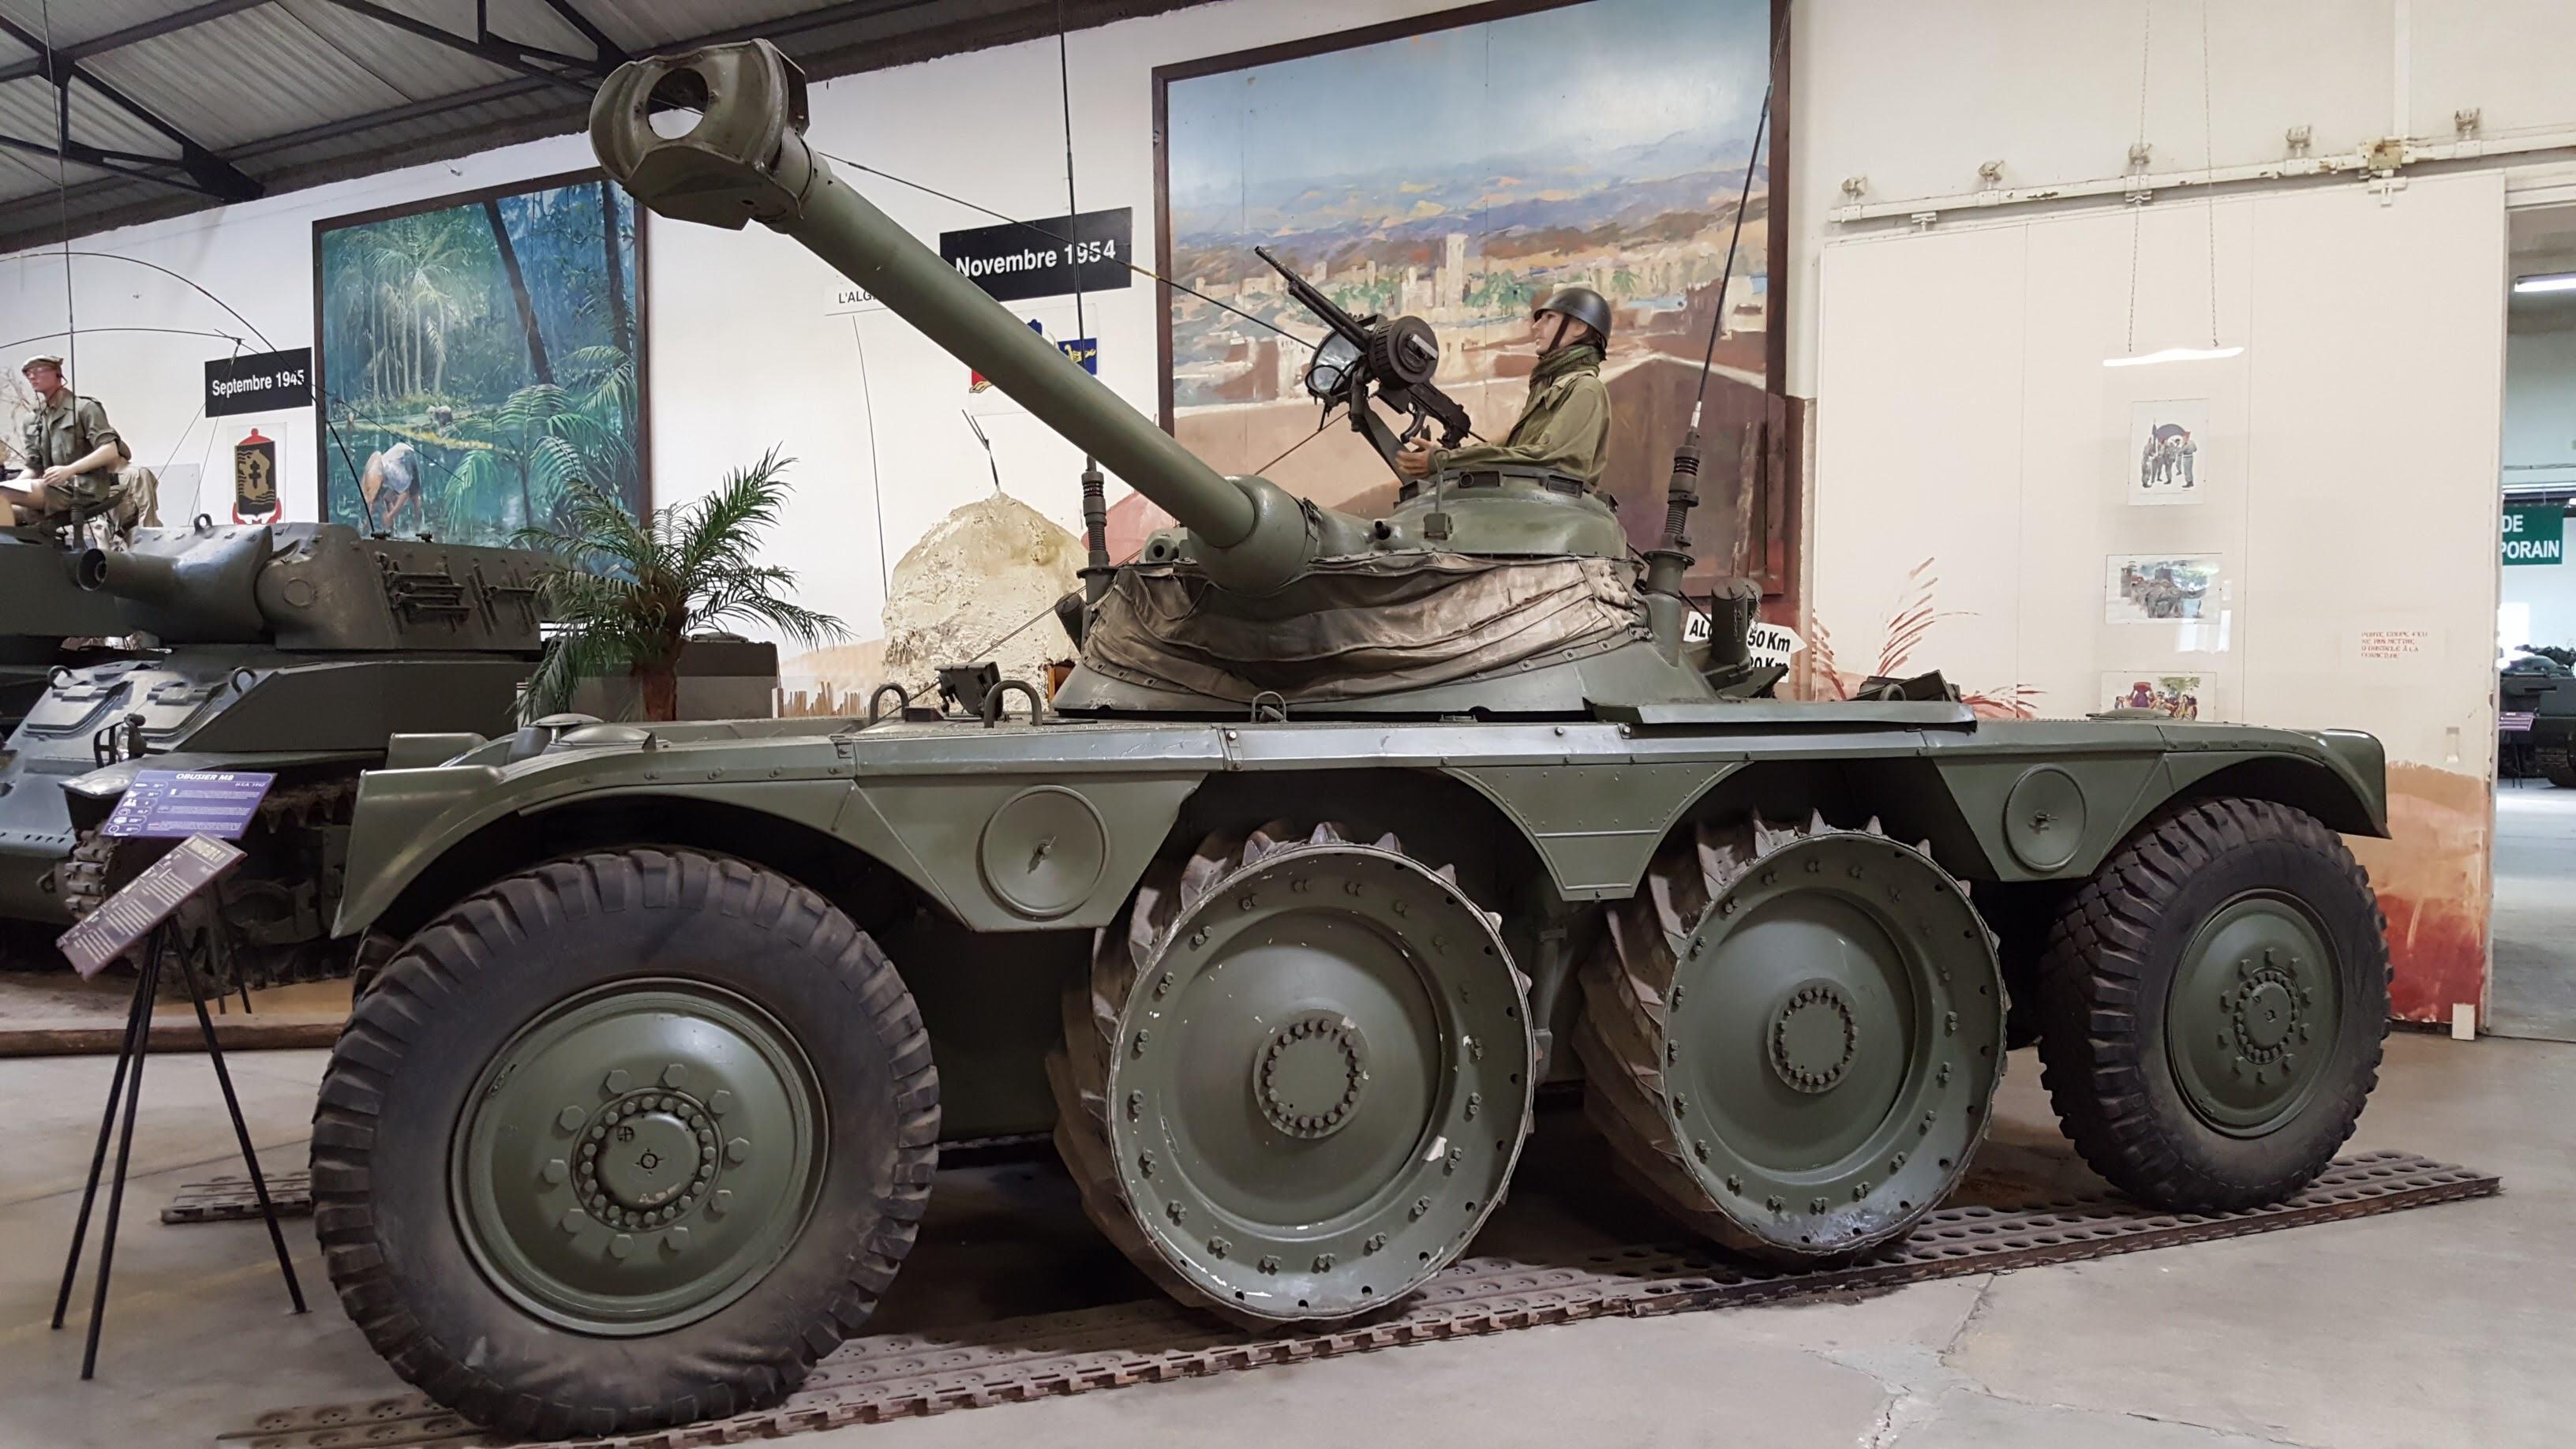 Review: Saumur Tank Museum - Mechtraveller